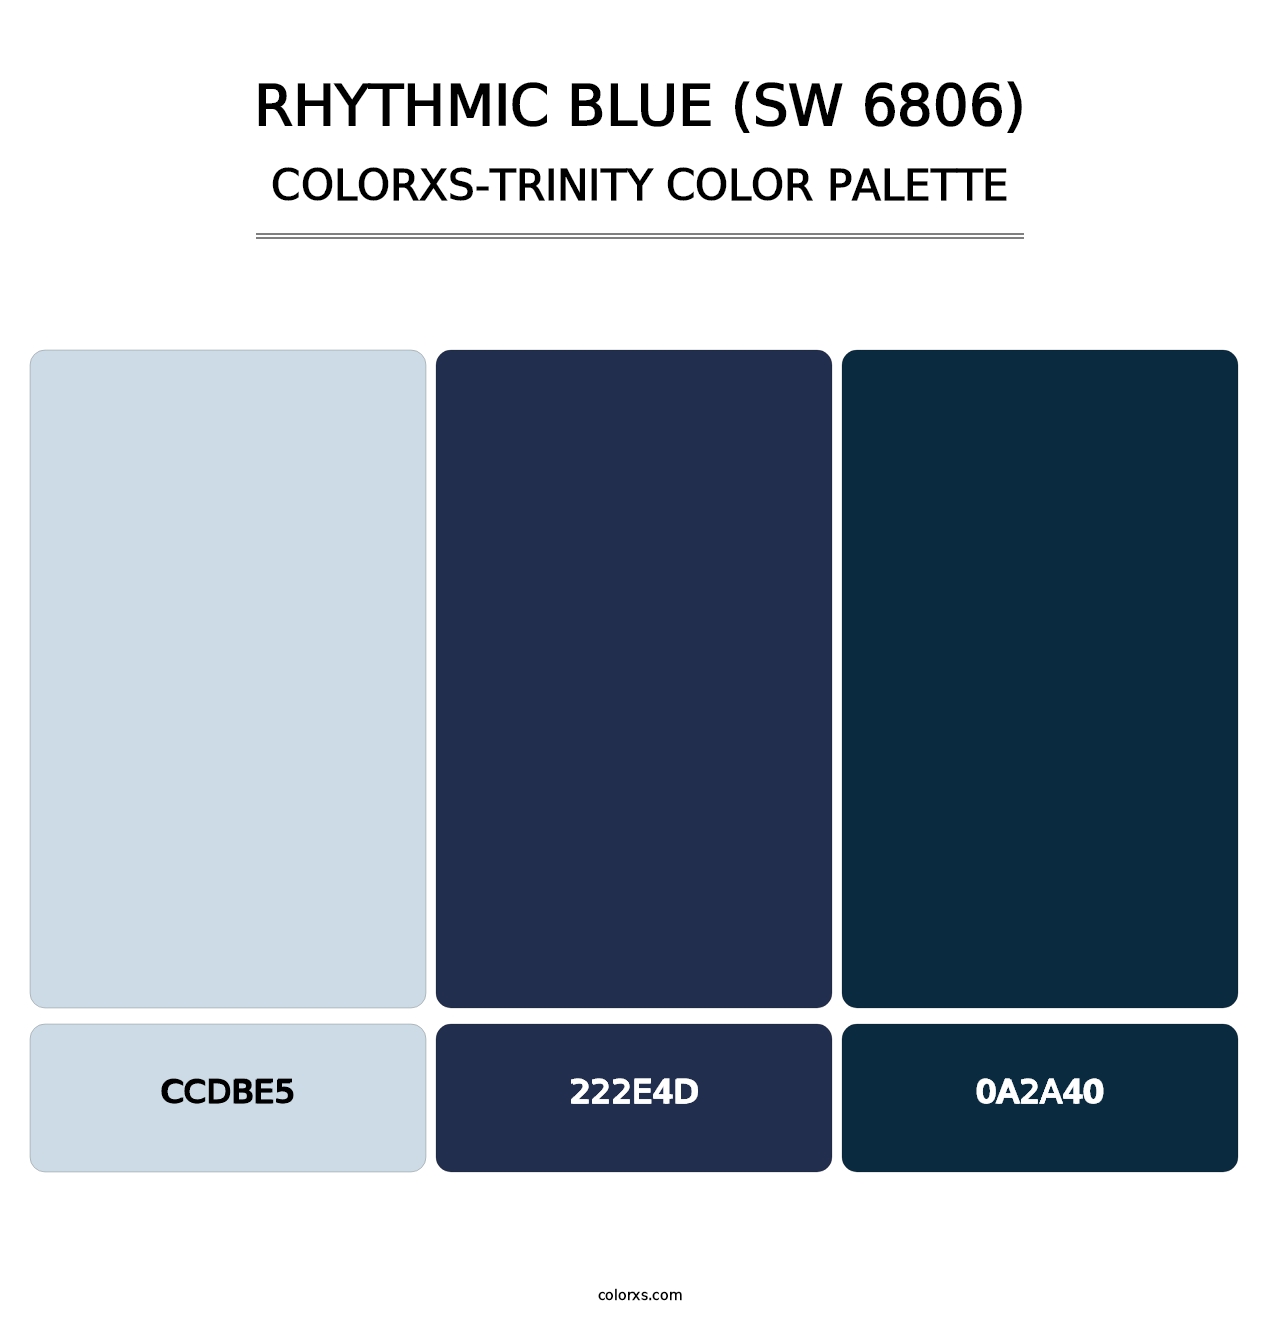 Rhythmic Blue (SW 6806) - Colorxs Trinity Palette